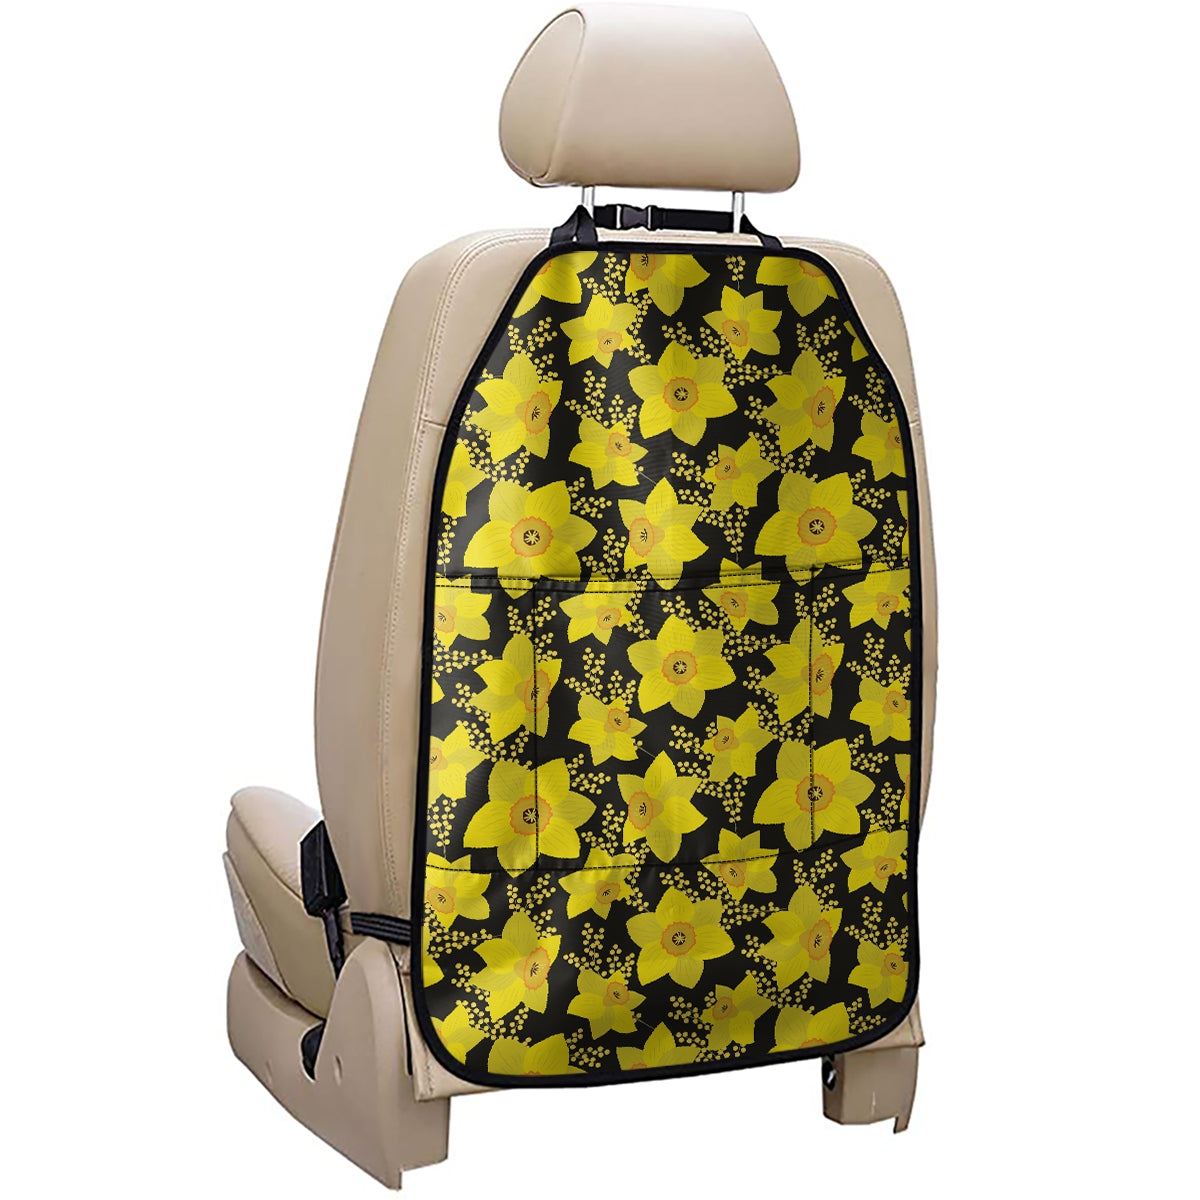 Daffodil And Mimosa Pattern Print Car Seat Organizers